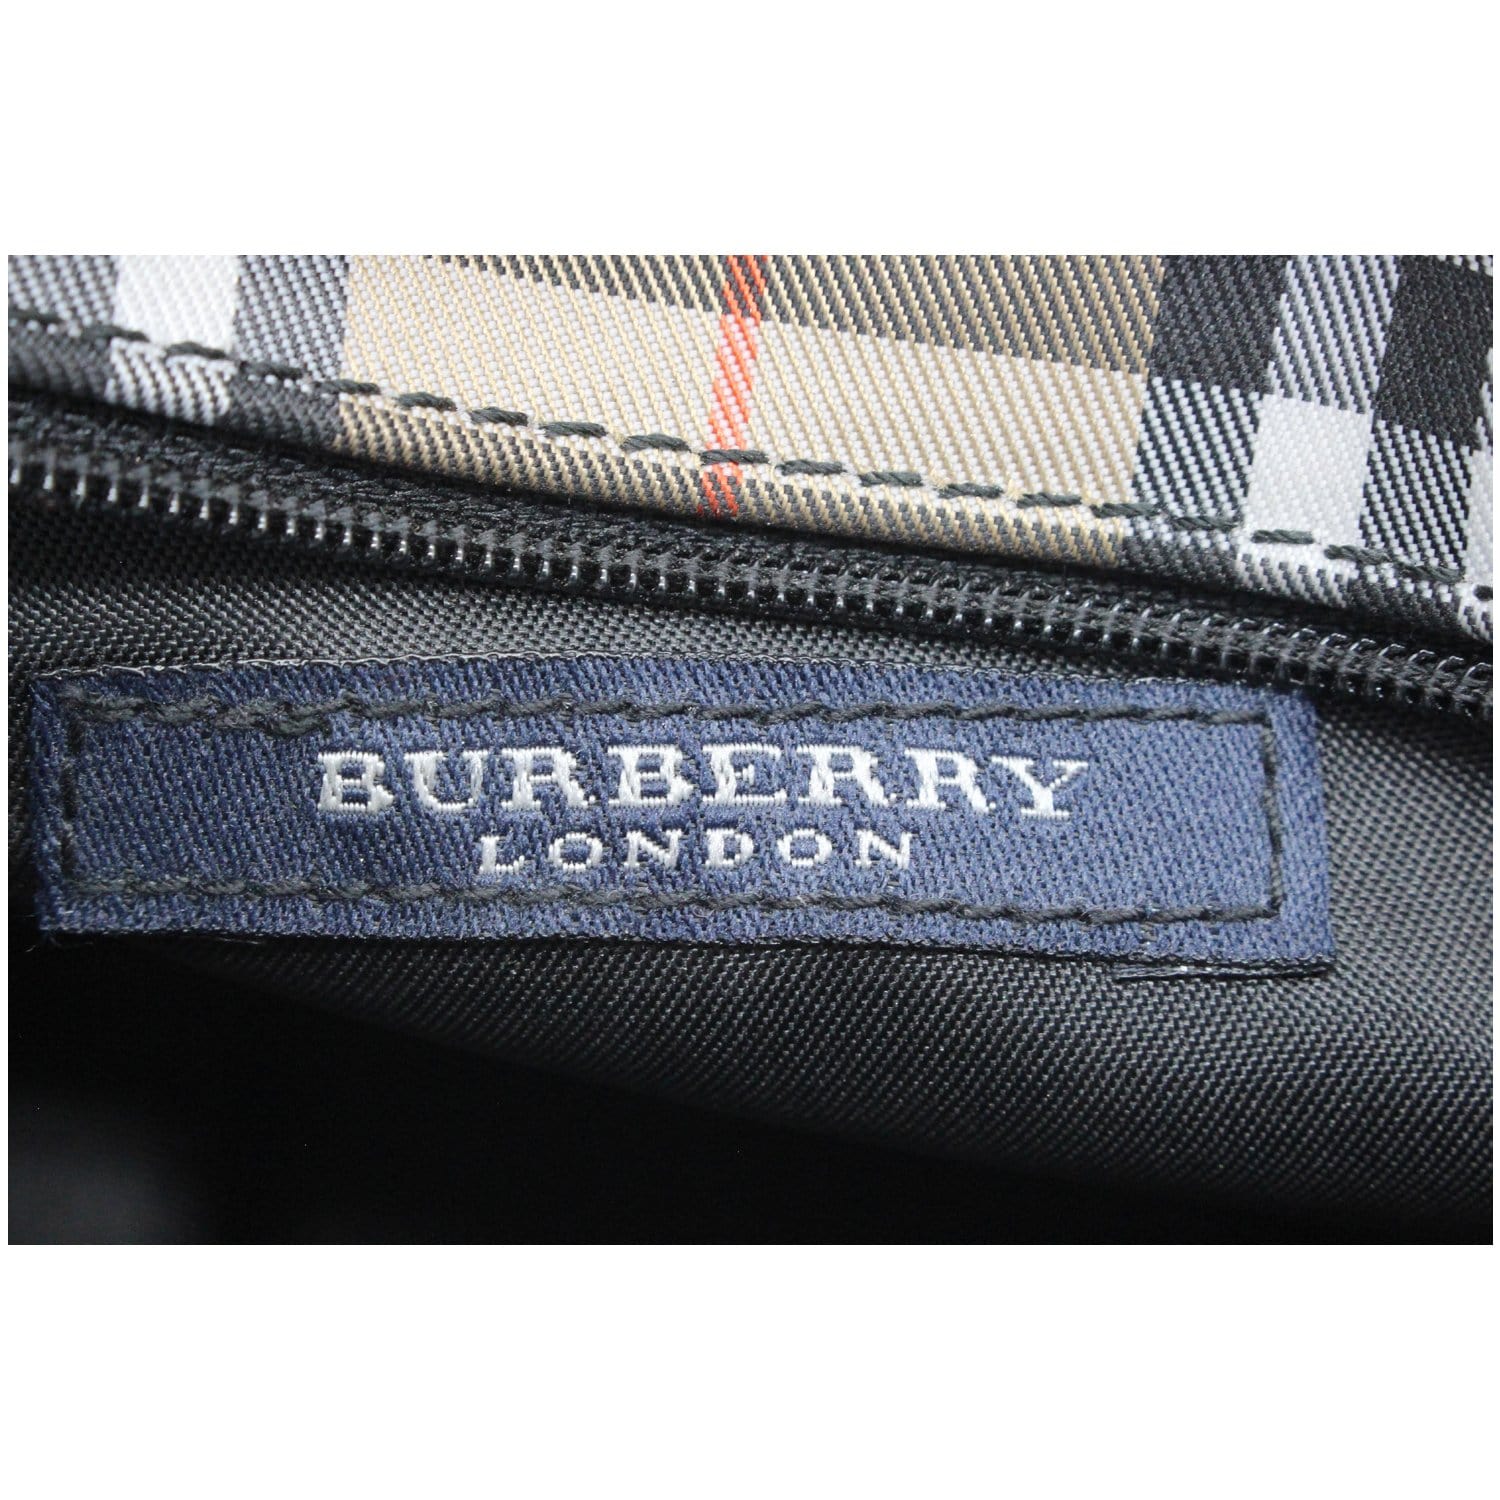 Authentic Burberry London Handbag  Burberry london, Burberry bag, Handbag